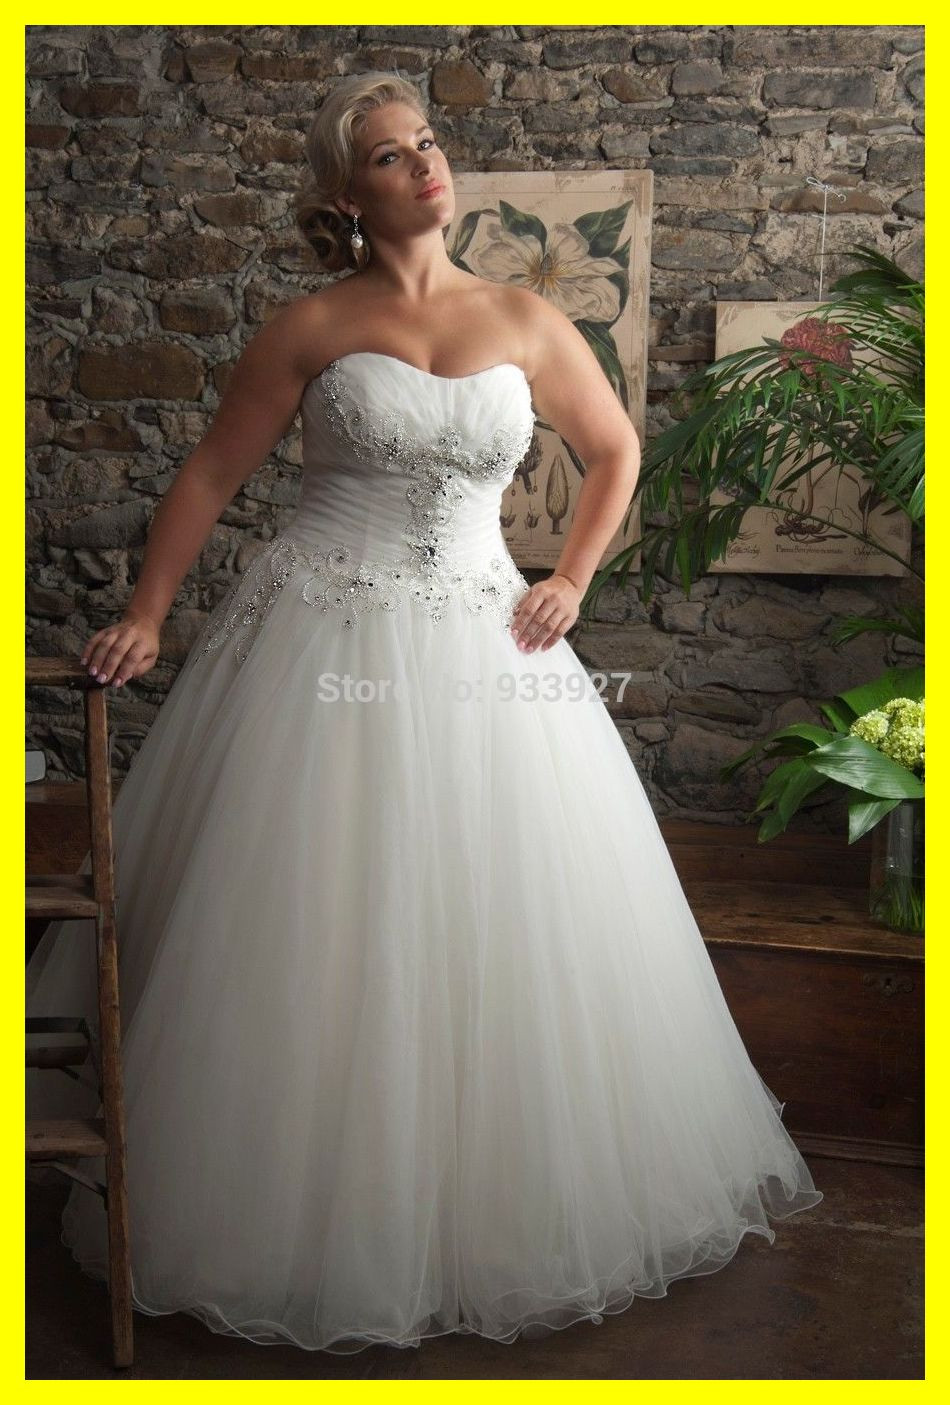 Discount Plus Size Wedding Dresses
 Discount Plus Size Wedding Dresses Short Uk f The Rack